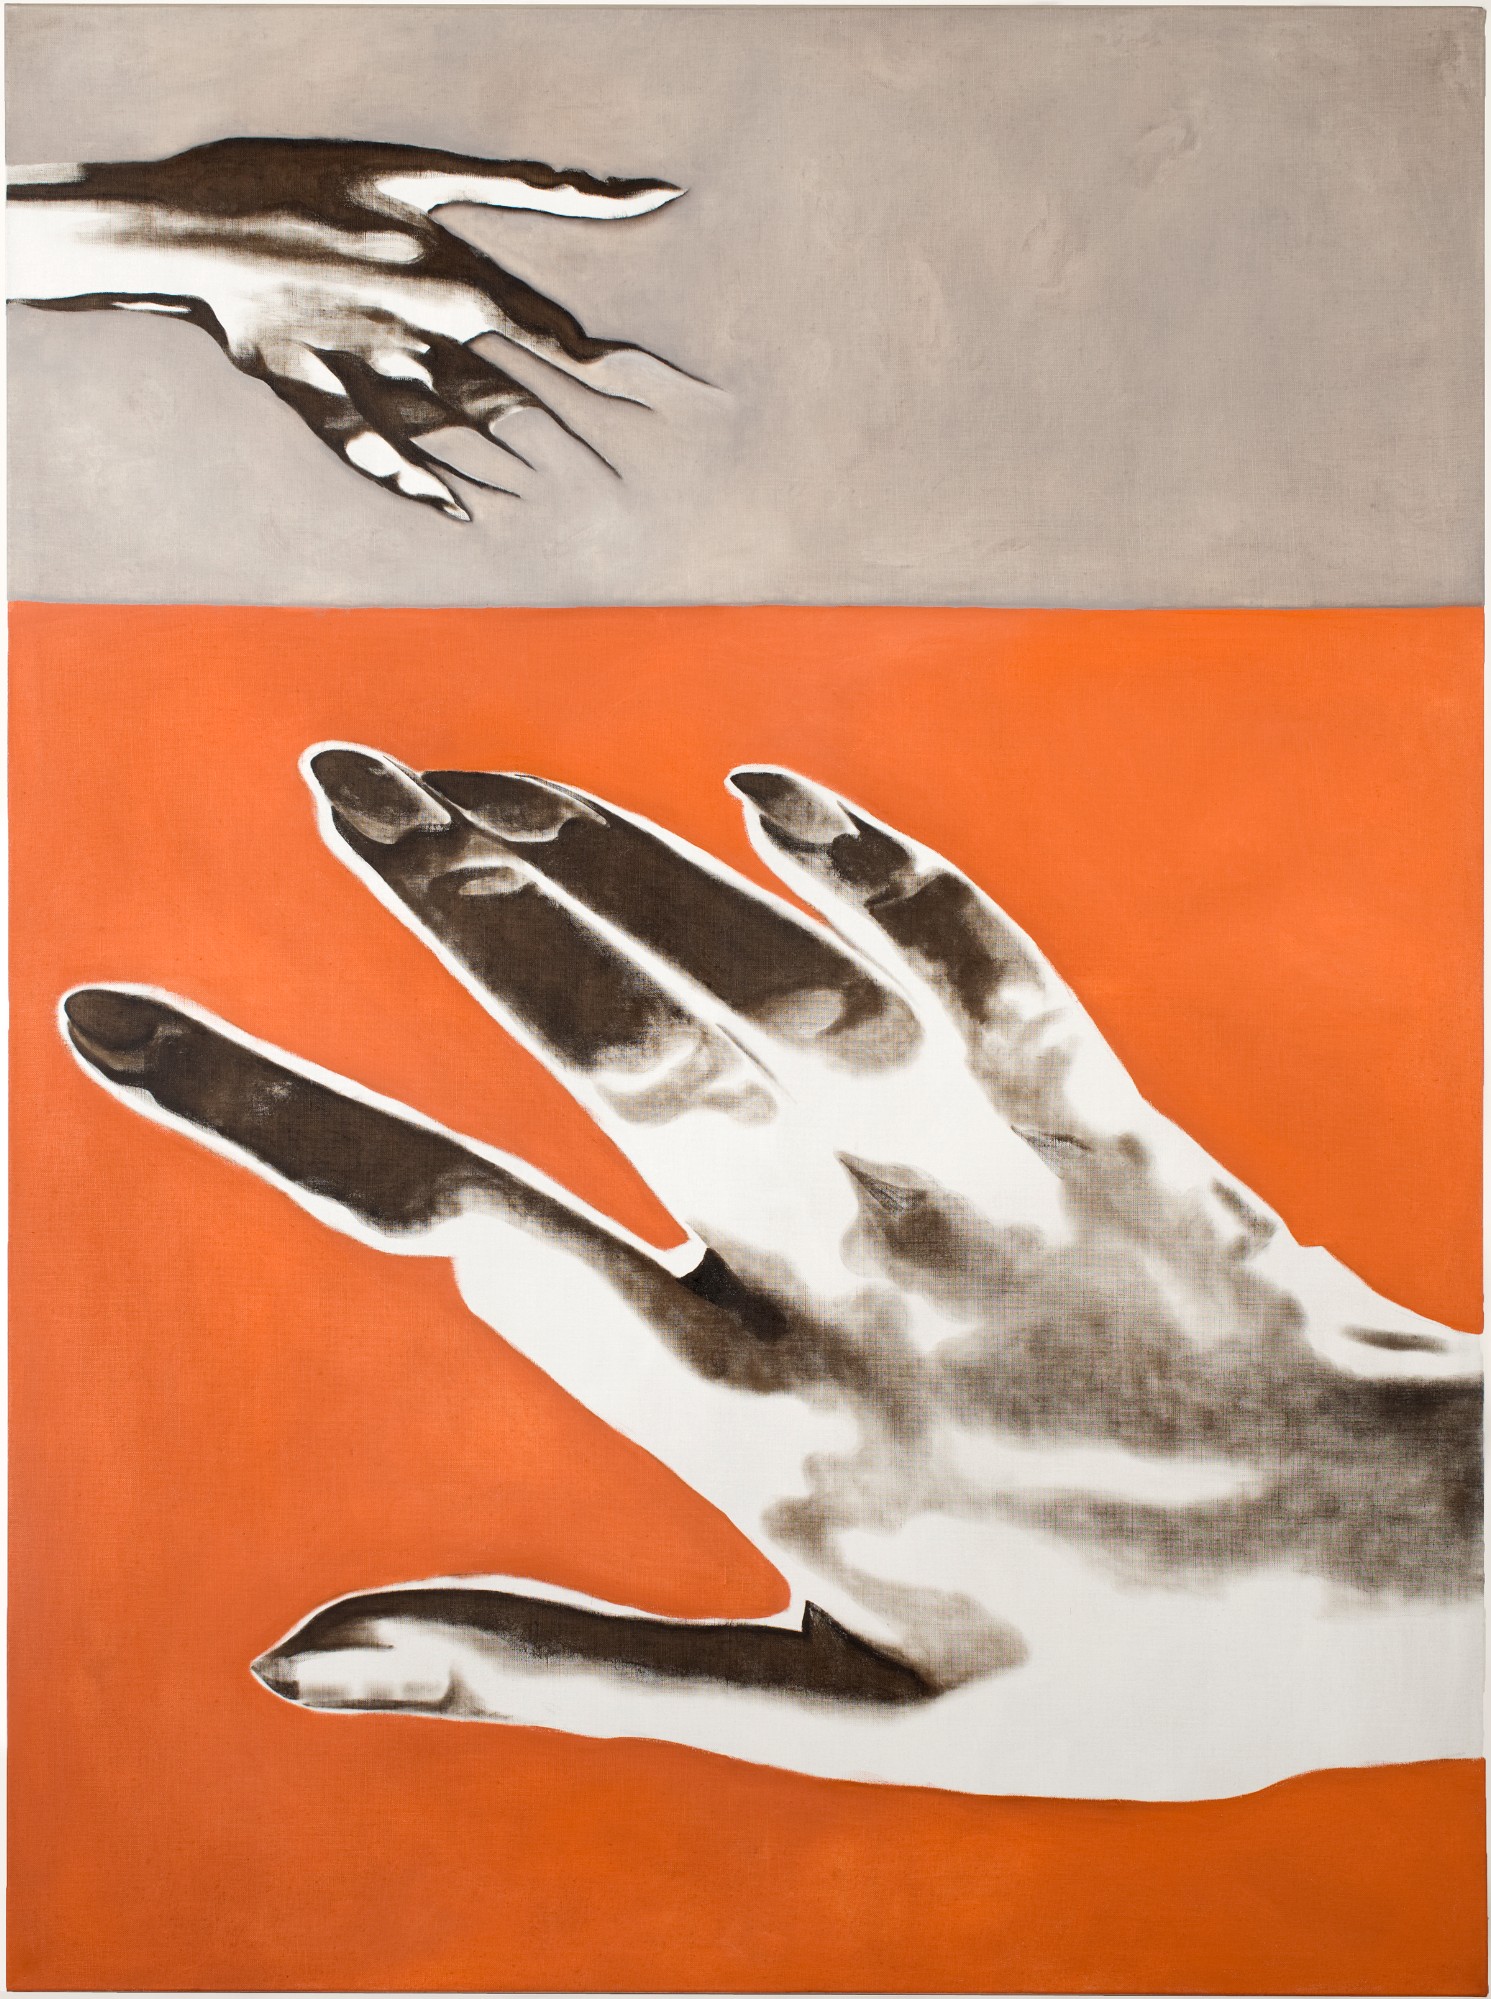 René Luckhardt, Untitled hands, 2014, oil on canvas, 200 x 150 cm